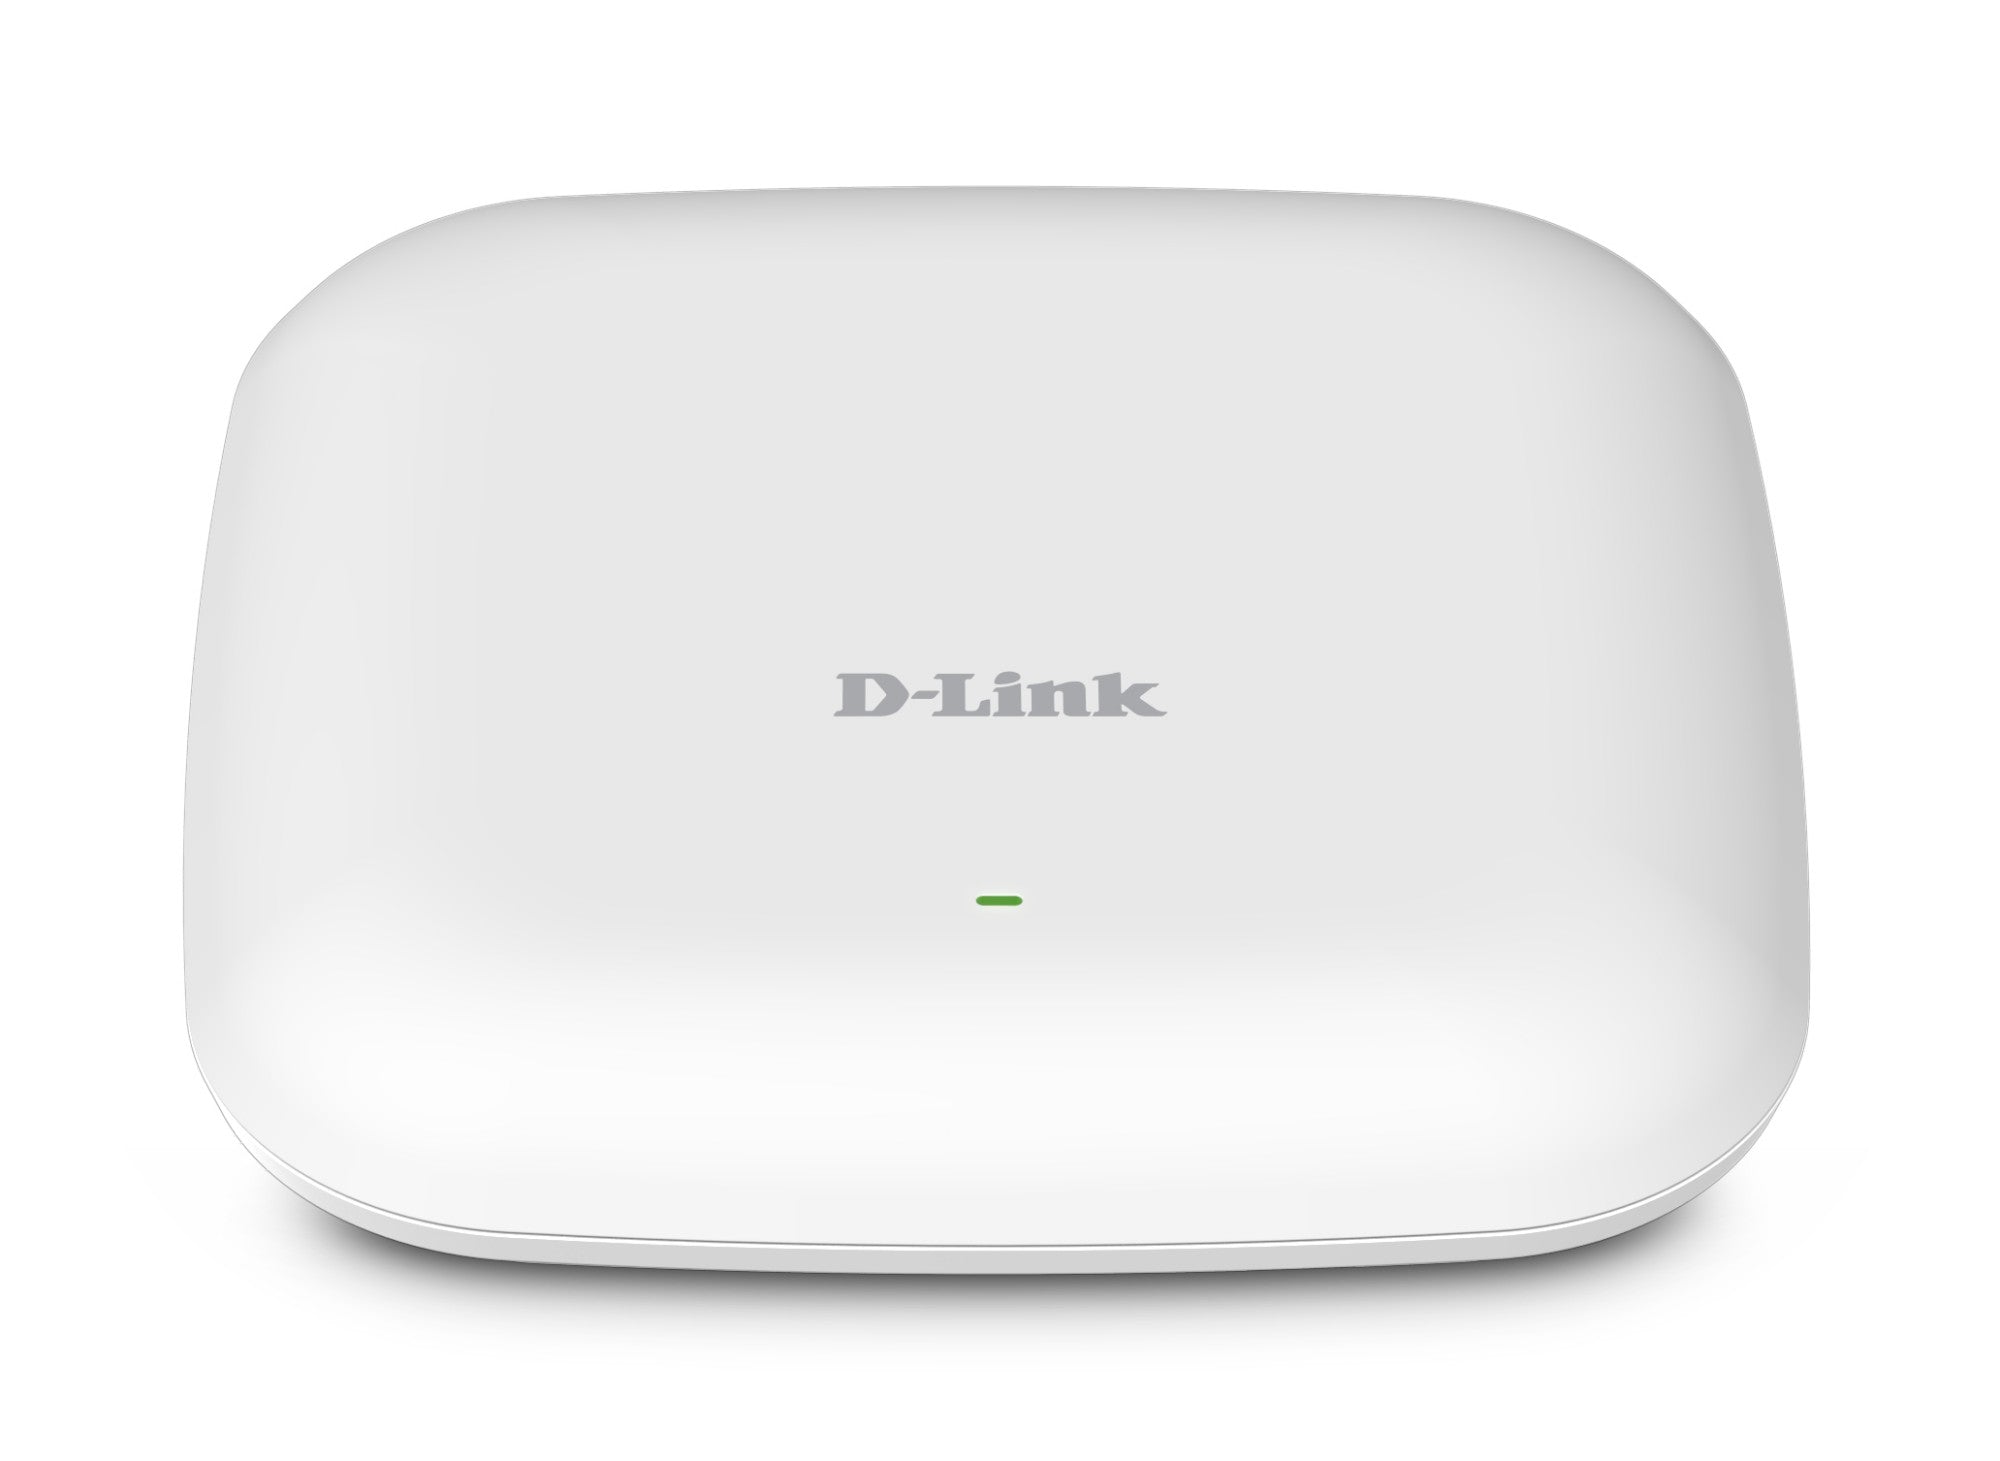 D-Link DBA-1210P Nuclias Cloud Wireless AC1300 Wave 2 Cloud-Managed Access Point